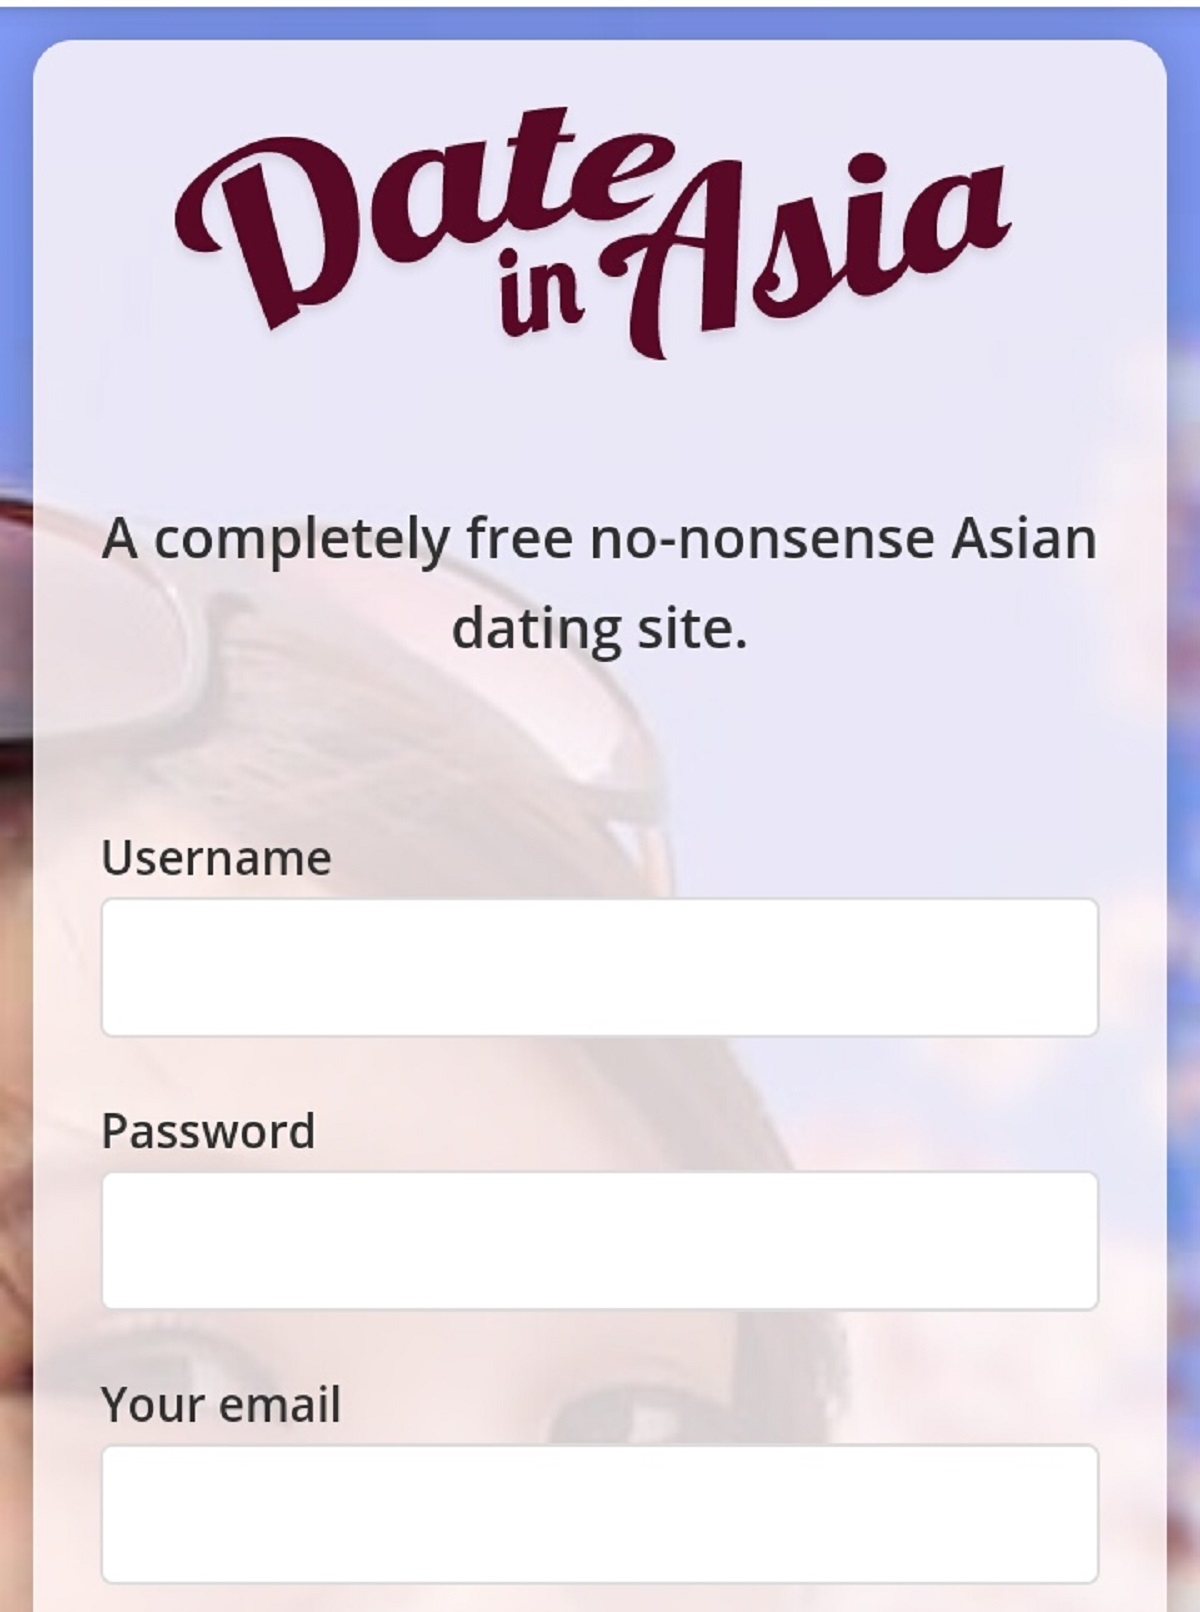 Asian dating site login in